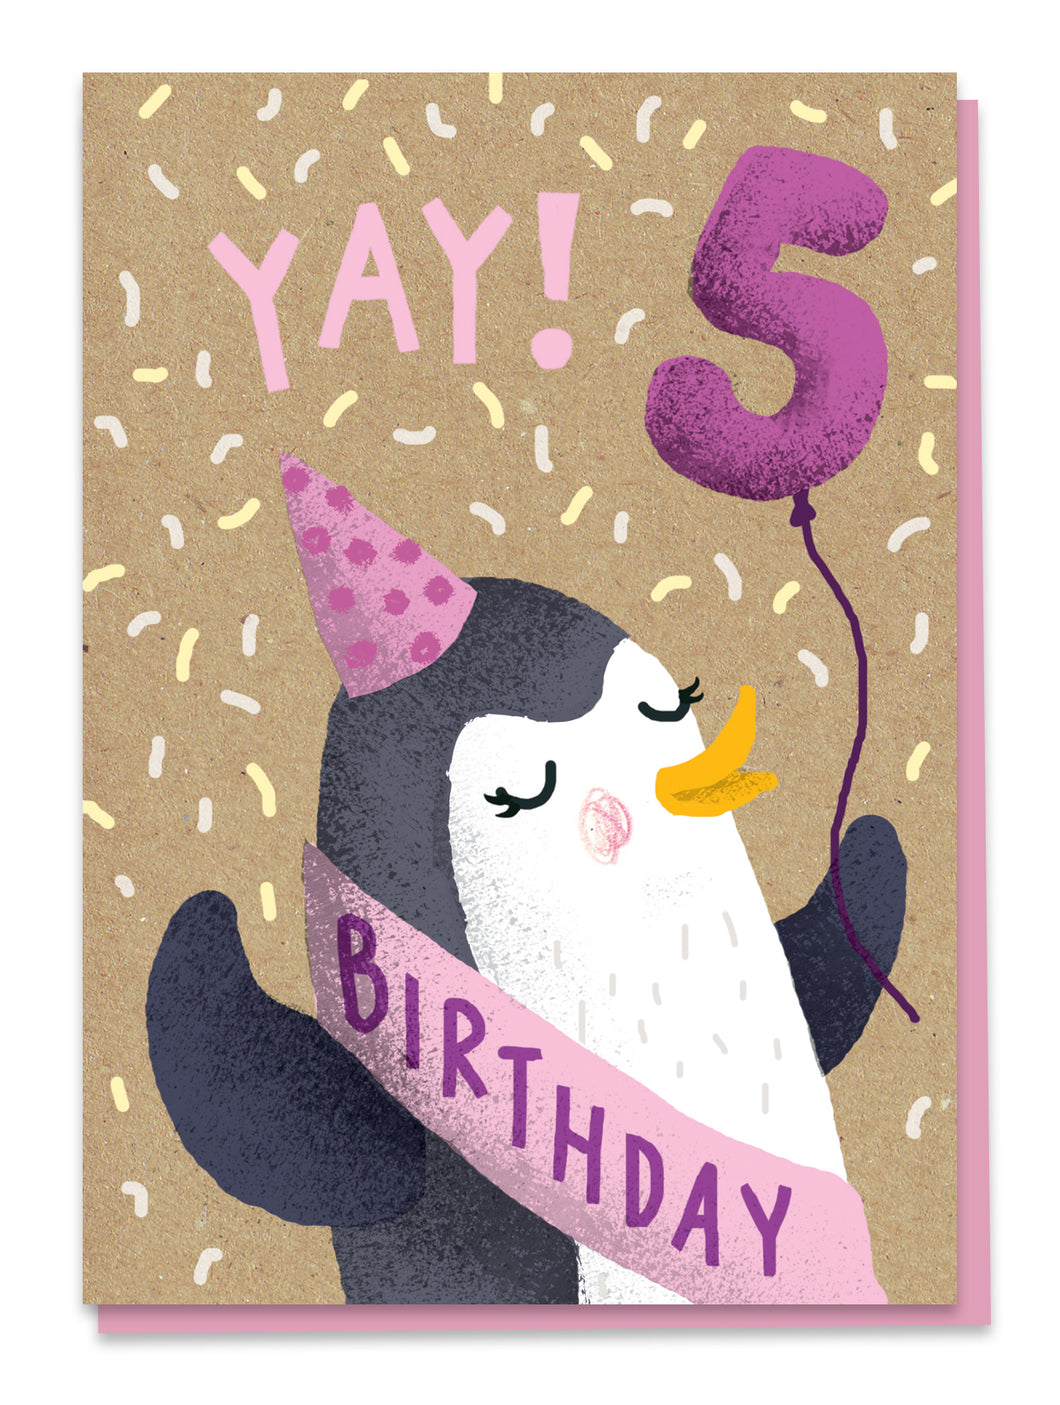 5 Today! penguin